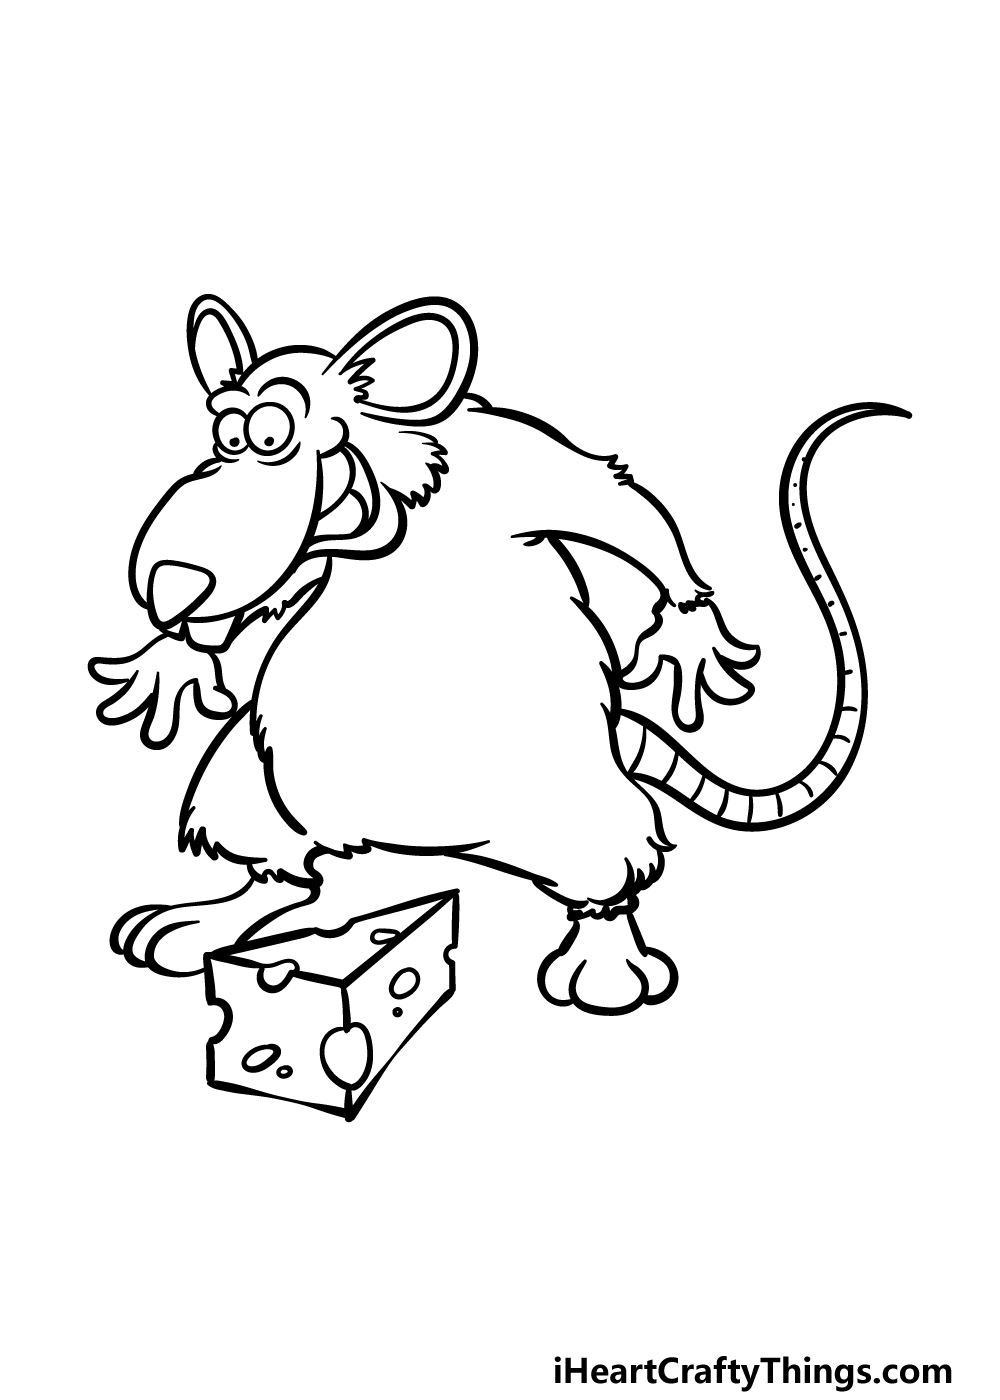 rat sketches on Pinterest